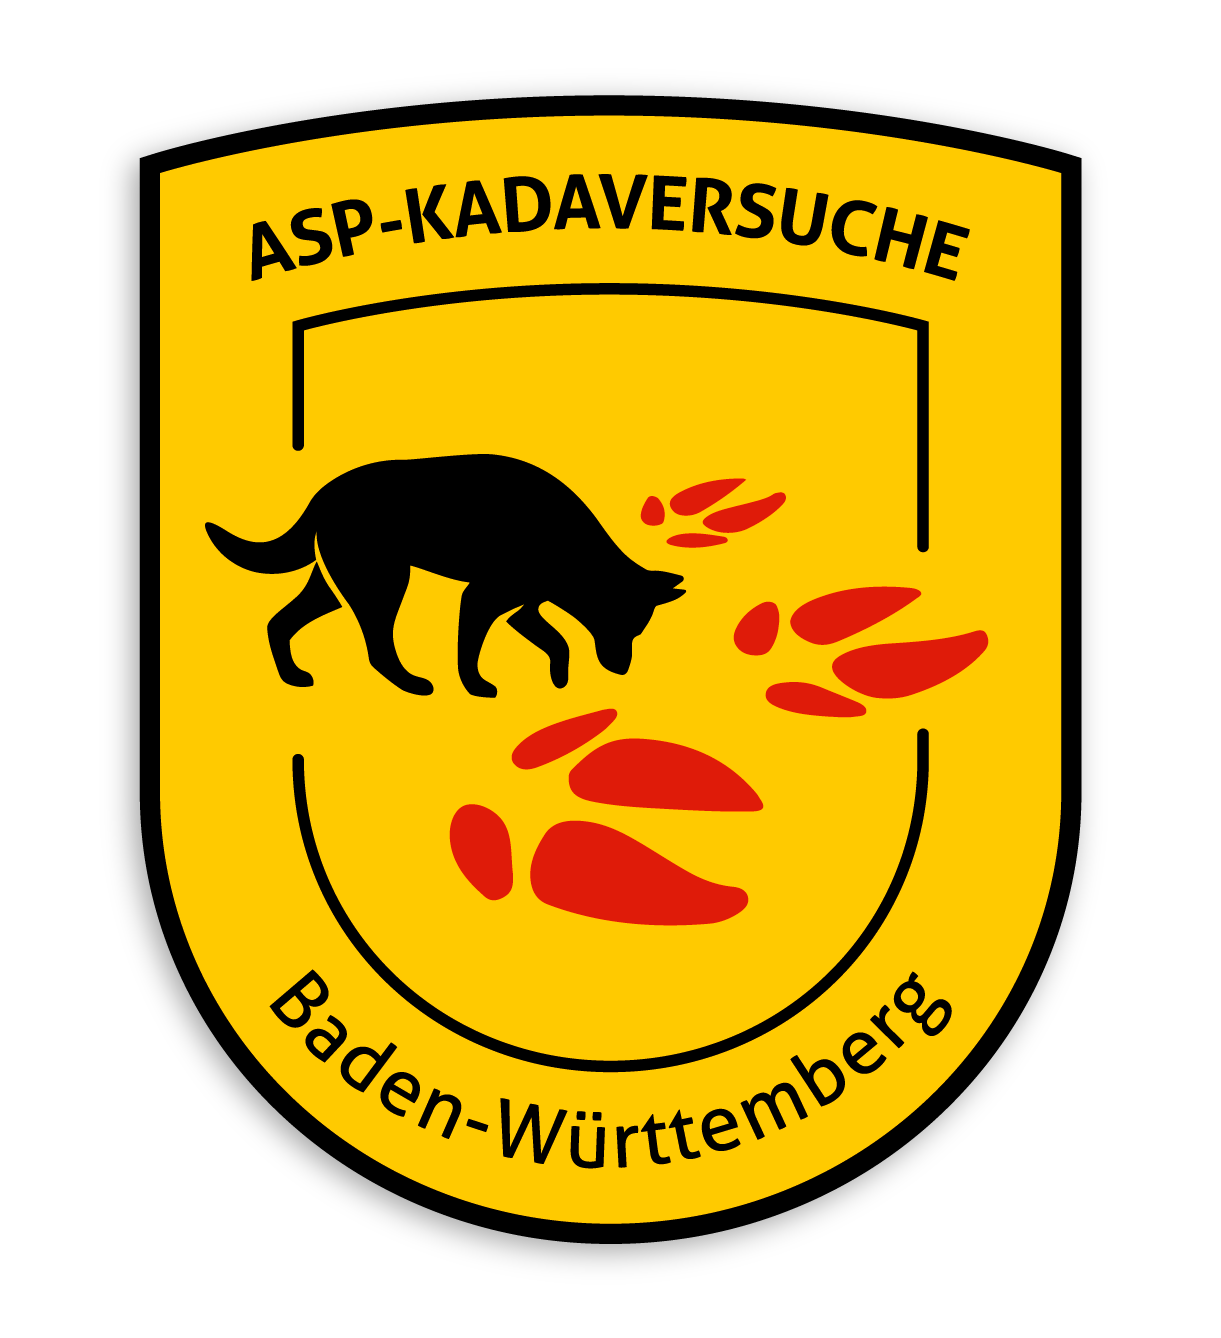 ASP-Kadaver-Suche: Infos für Hundeführer